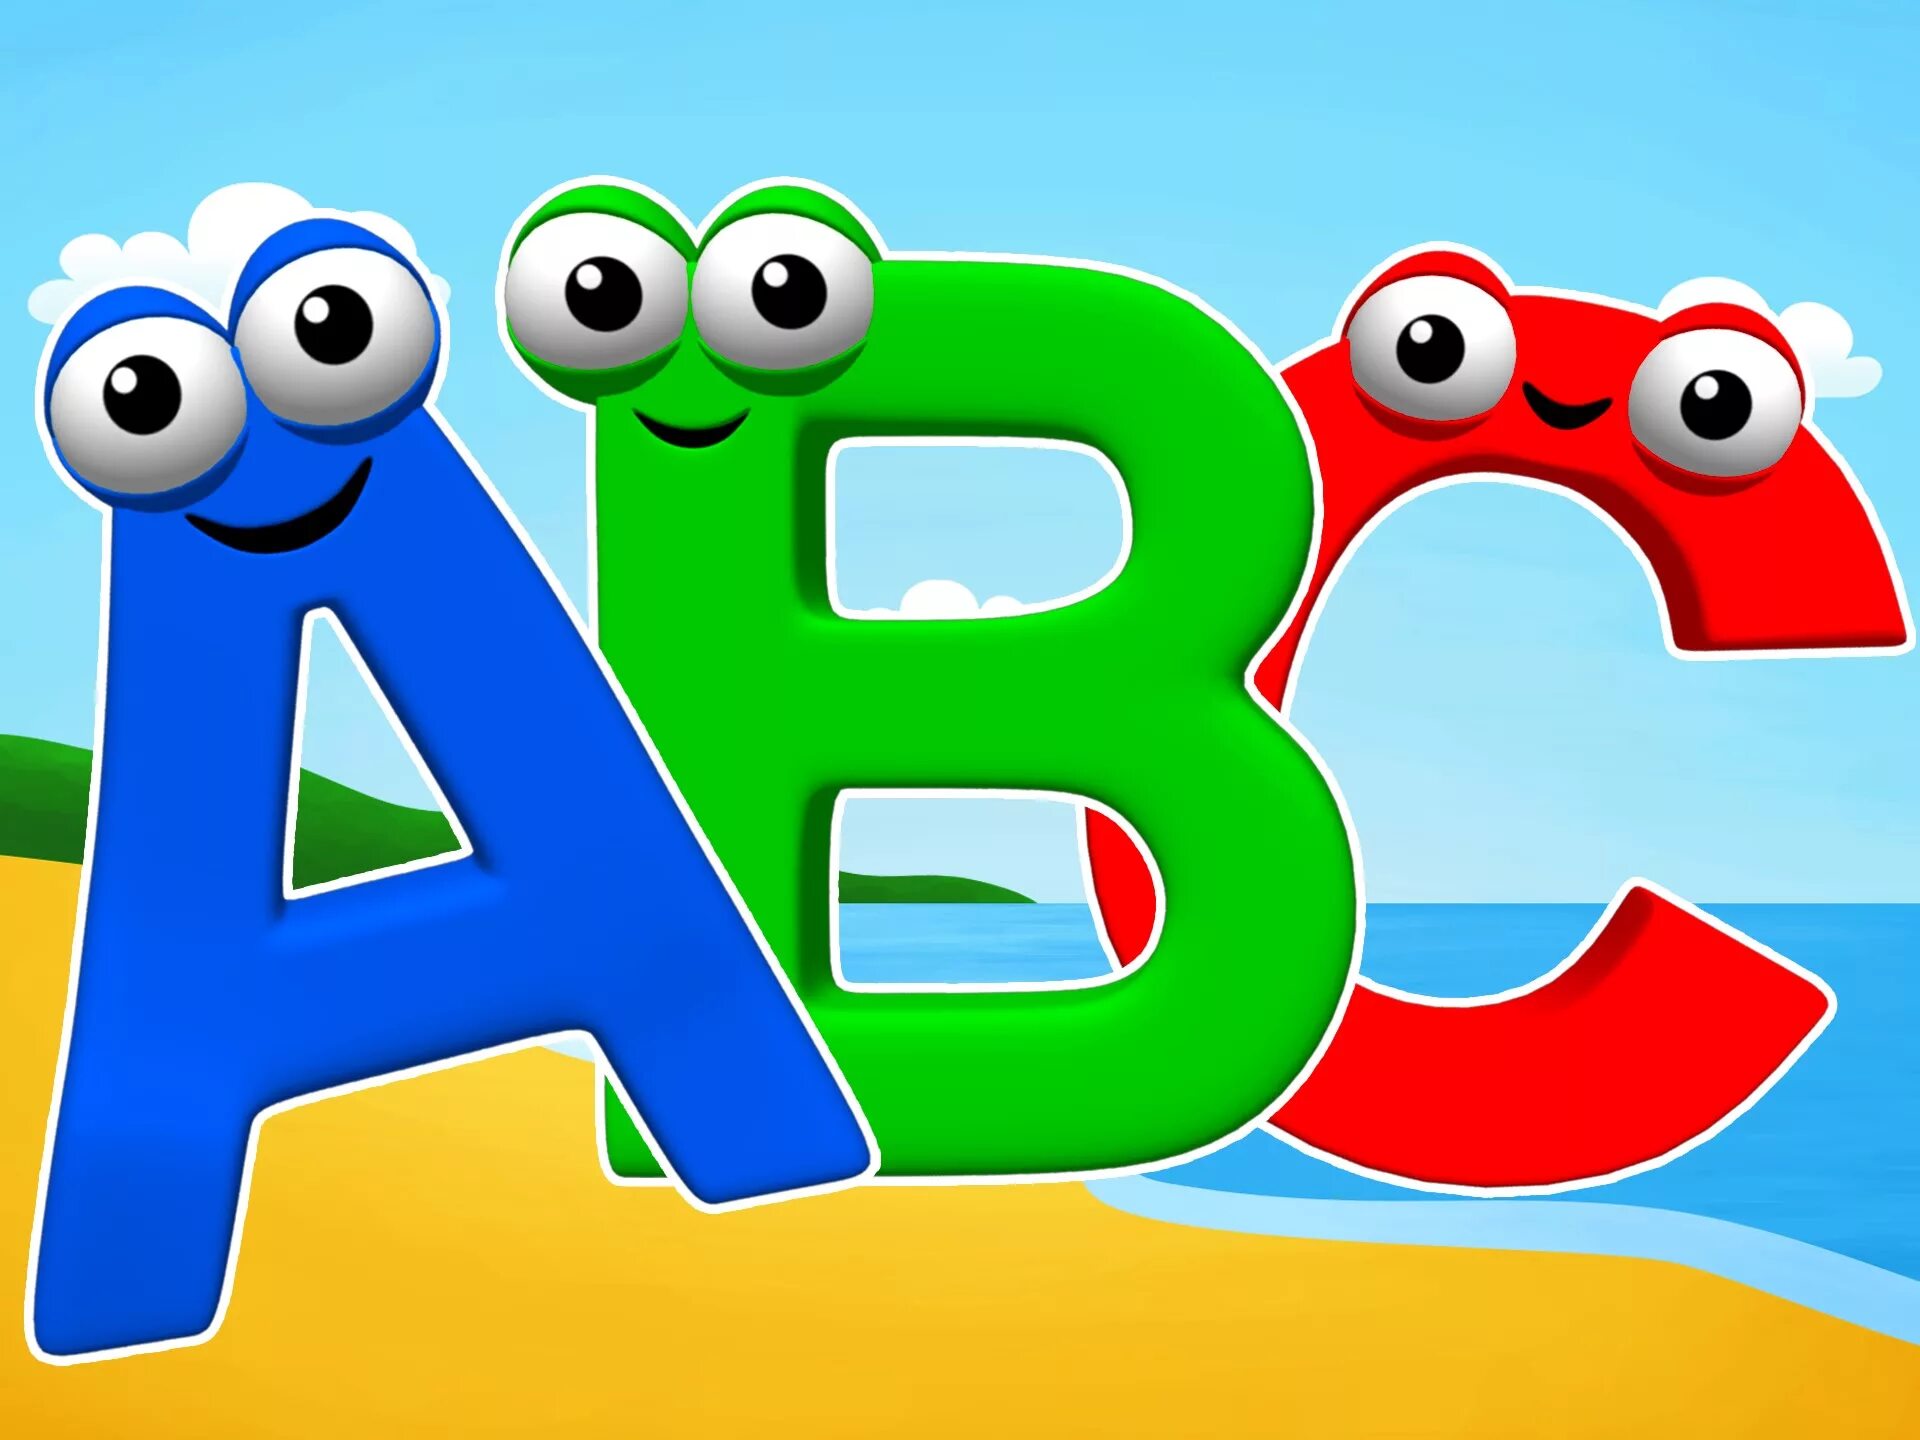 Презентация английской буквы. ABC. Буквы алфавита для детей. Английские буквы для детей. ABC алфавит.